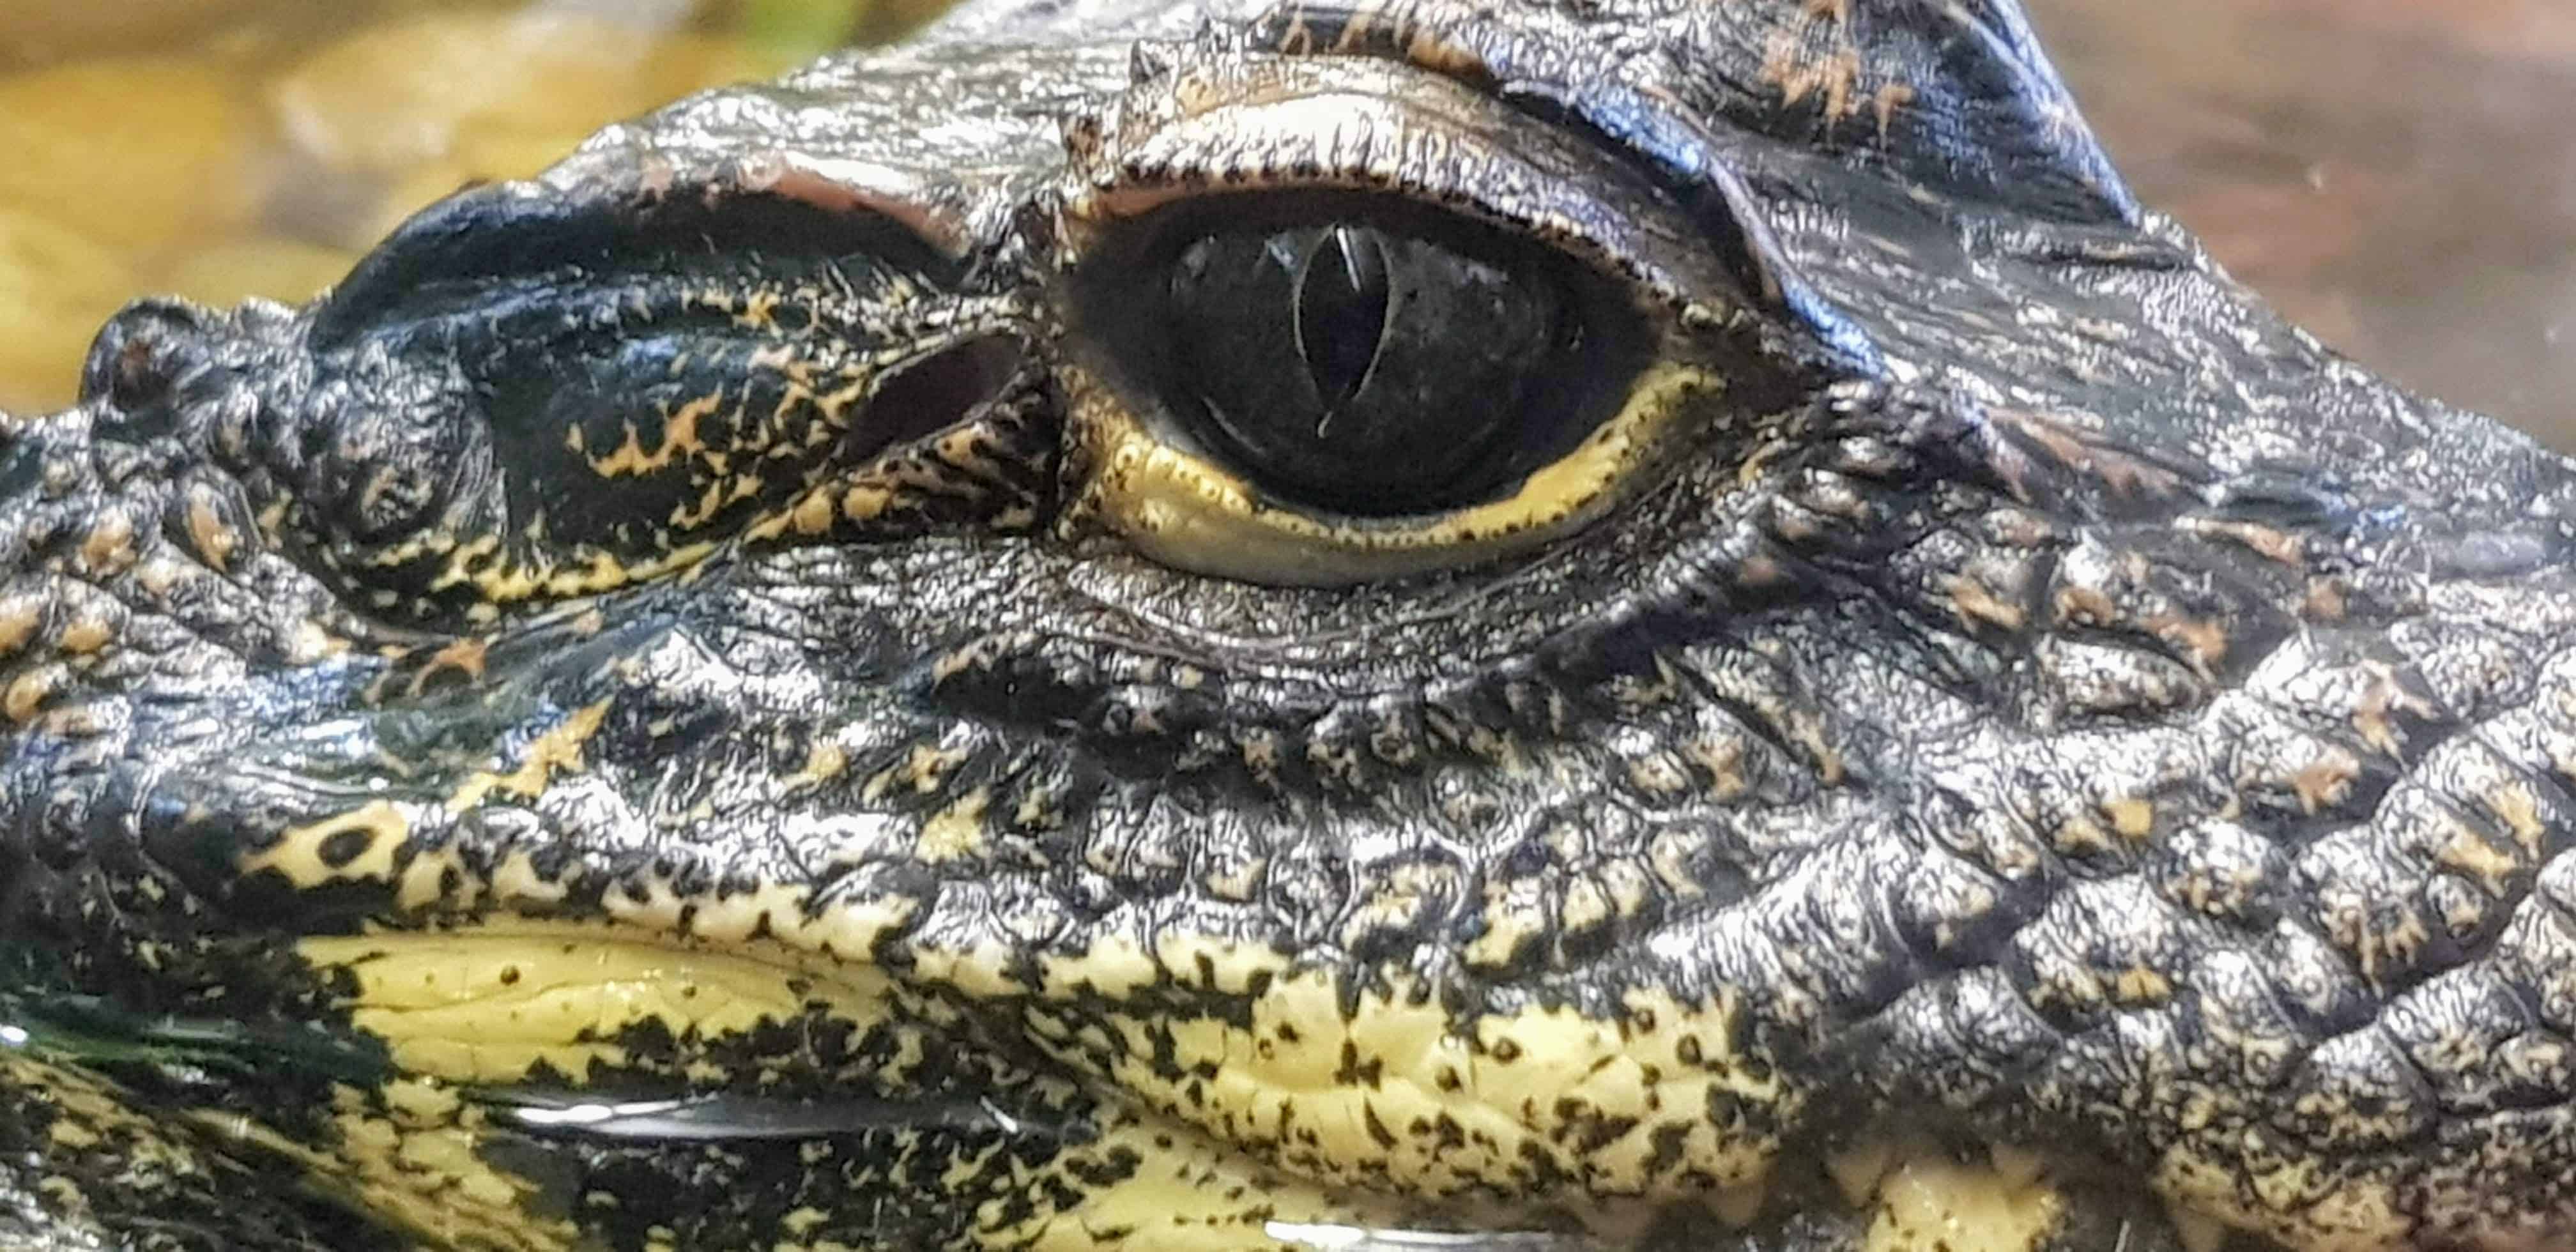 Krokodil im Familien-Ausflugsziel Reptilienzoo Happ in Klagenfurt am Wörthersee in Kärnten - Nahaufnahme Auge